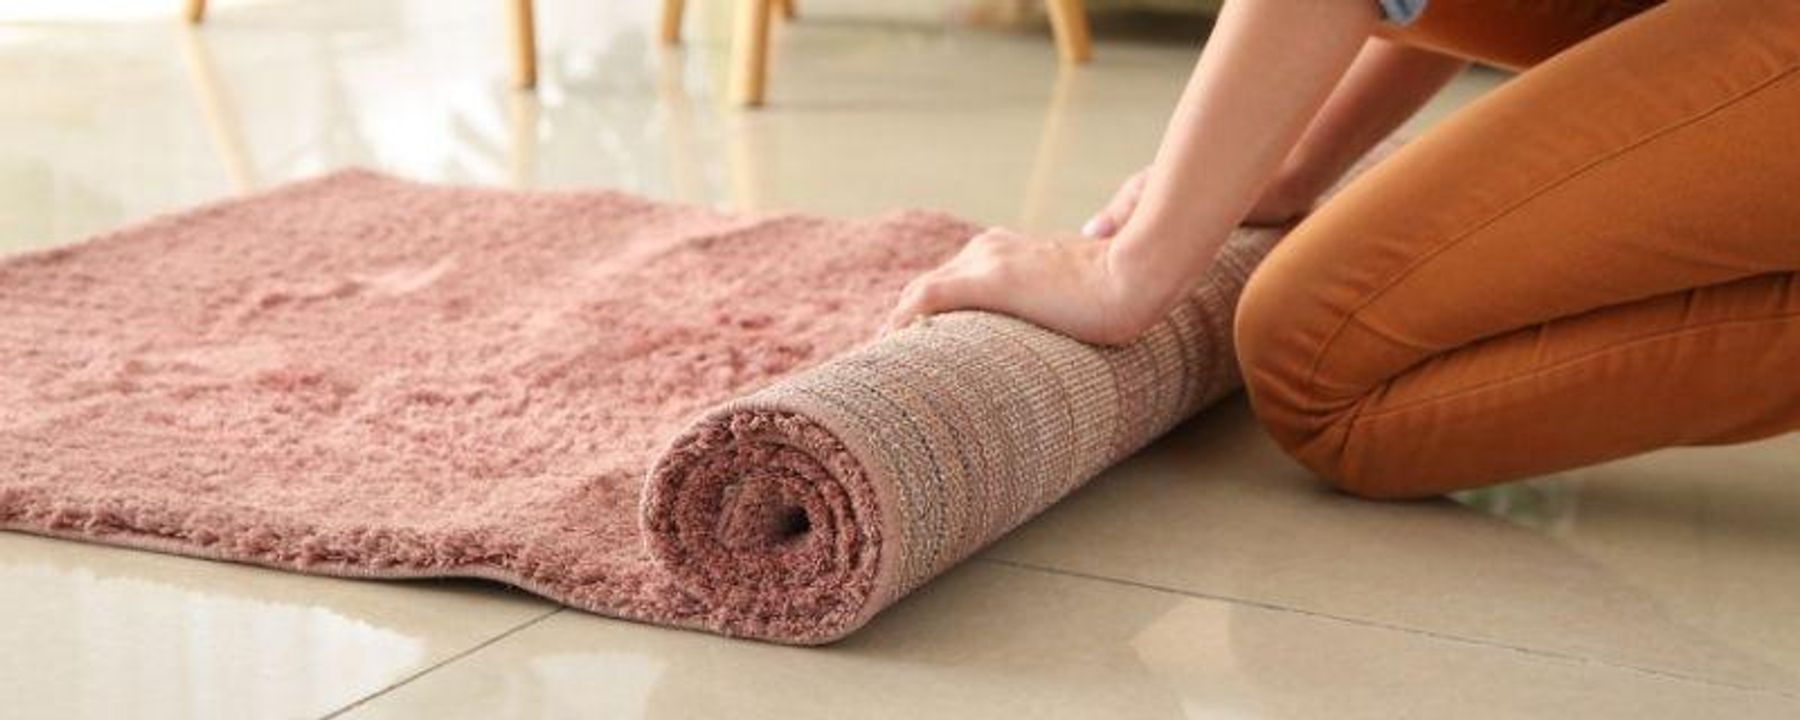 Benefits of Carpet - The Carpet and Rug Institute